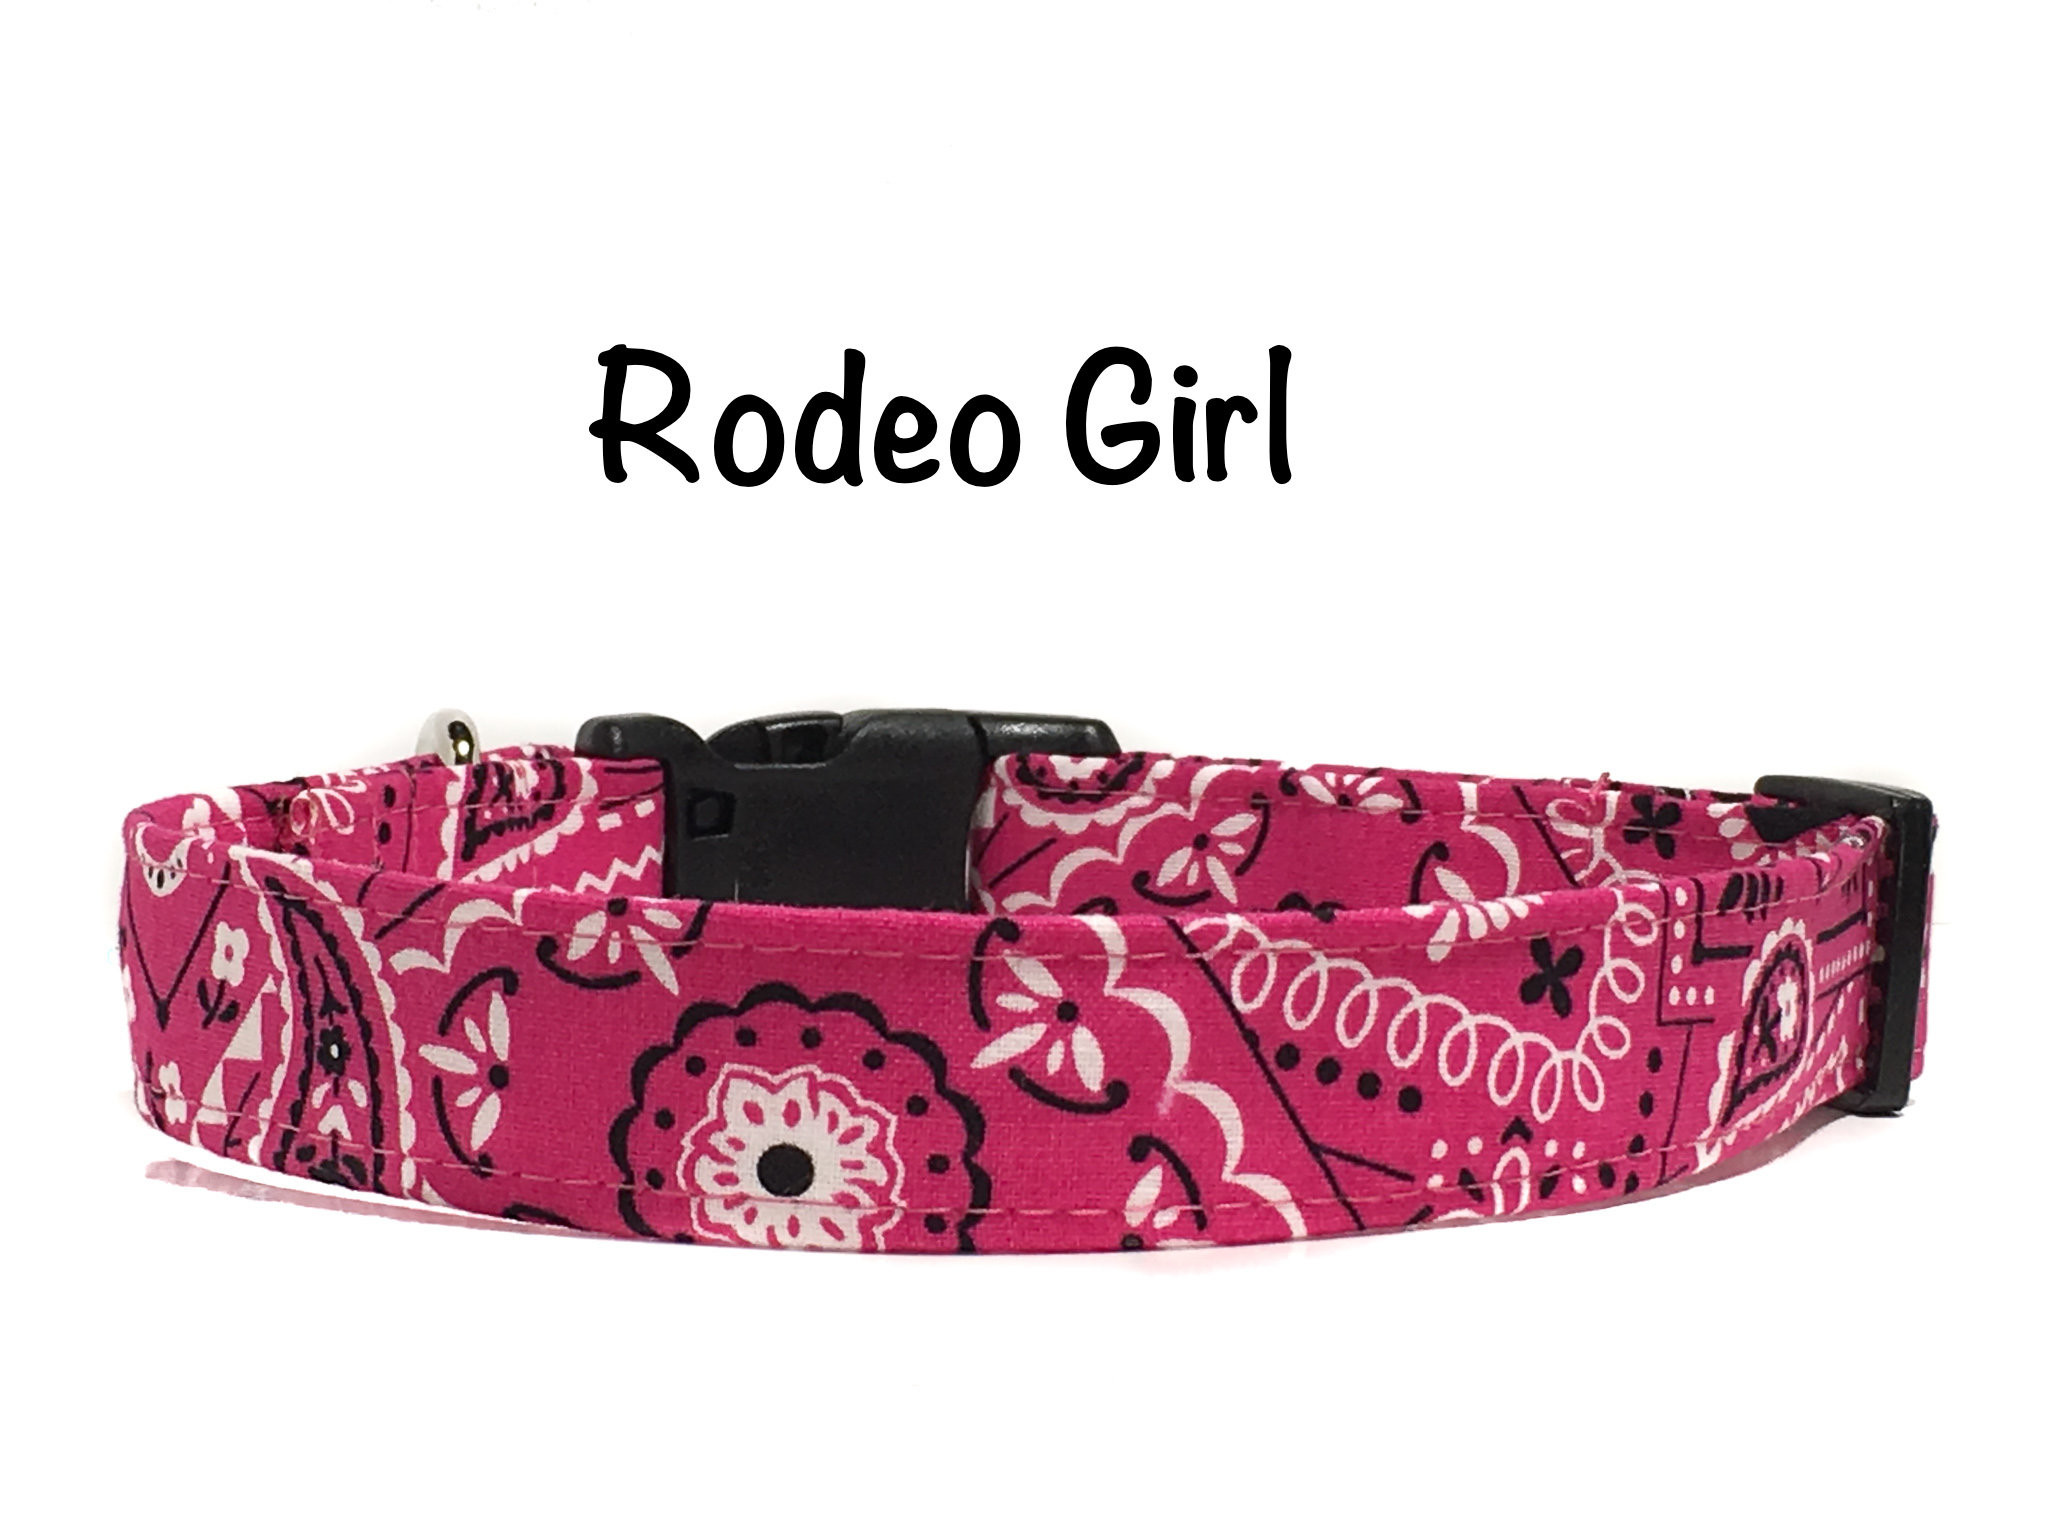 2048x1536 Dog collar, any size collar, bandana collar, cat collar, * Rodeo Girl*  collar, puppy collar